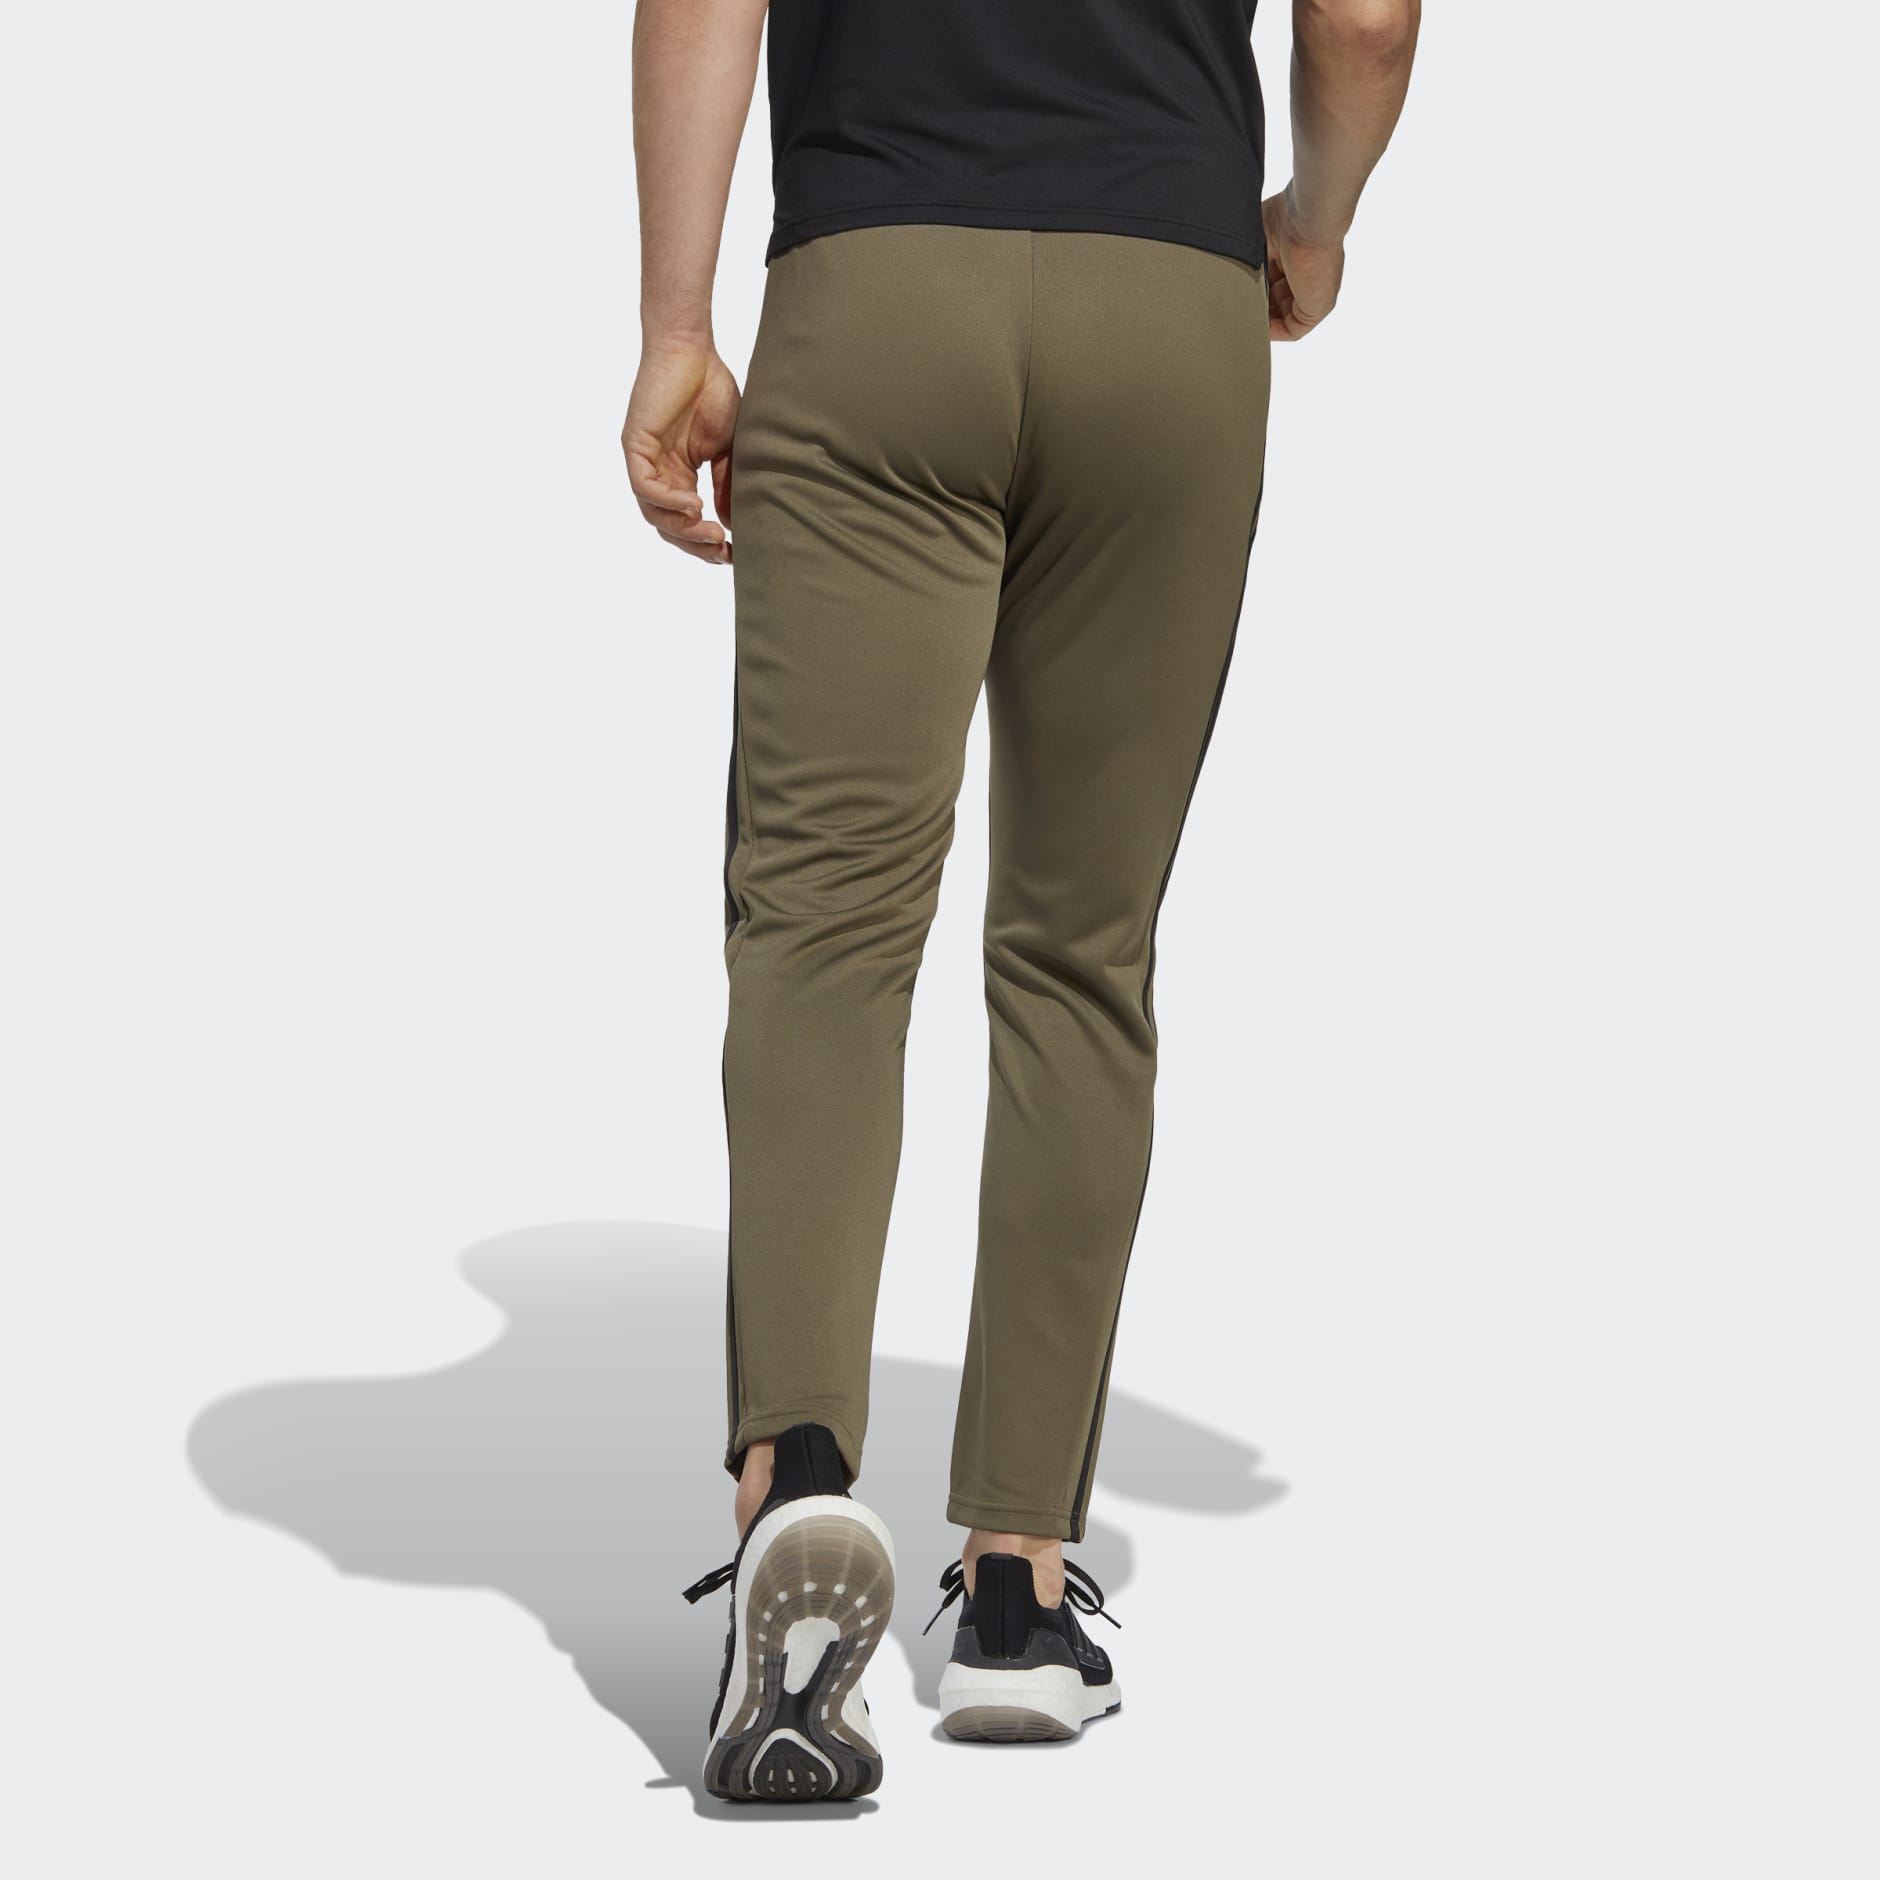 Clothing - Train Essentials 3-Stripes Training Pants - Green | adidas ...